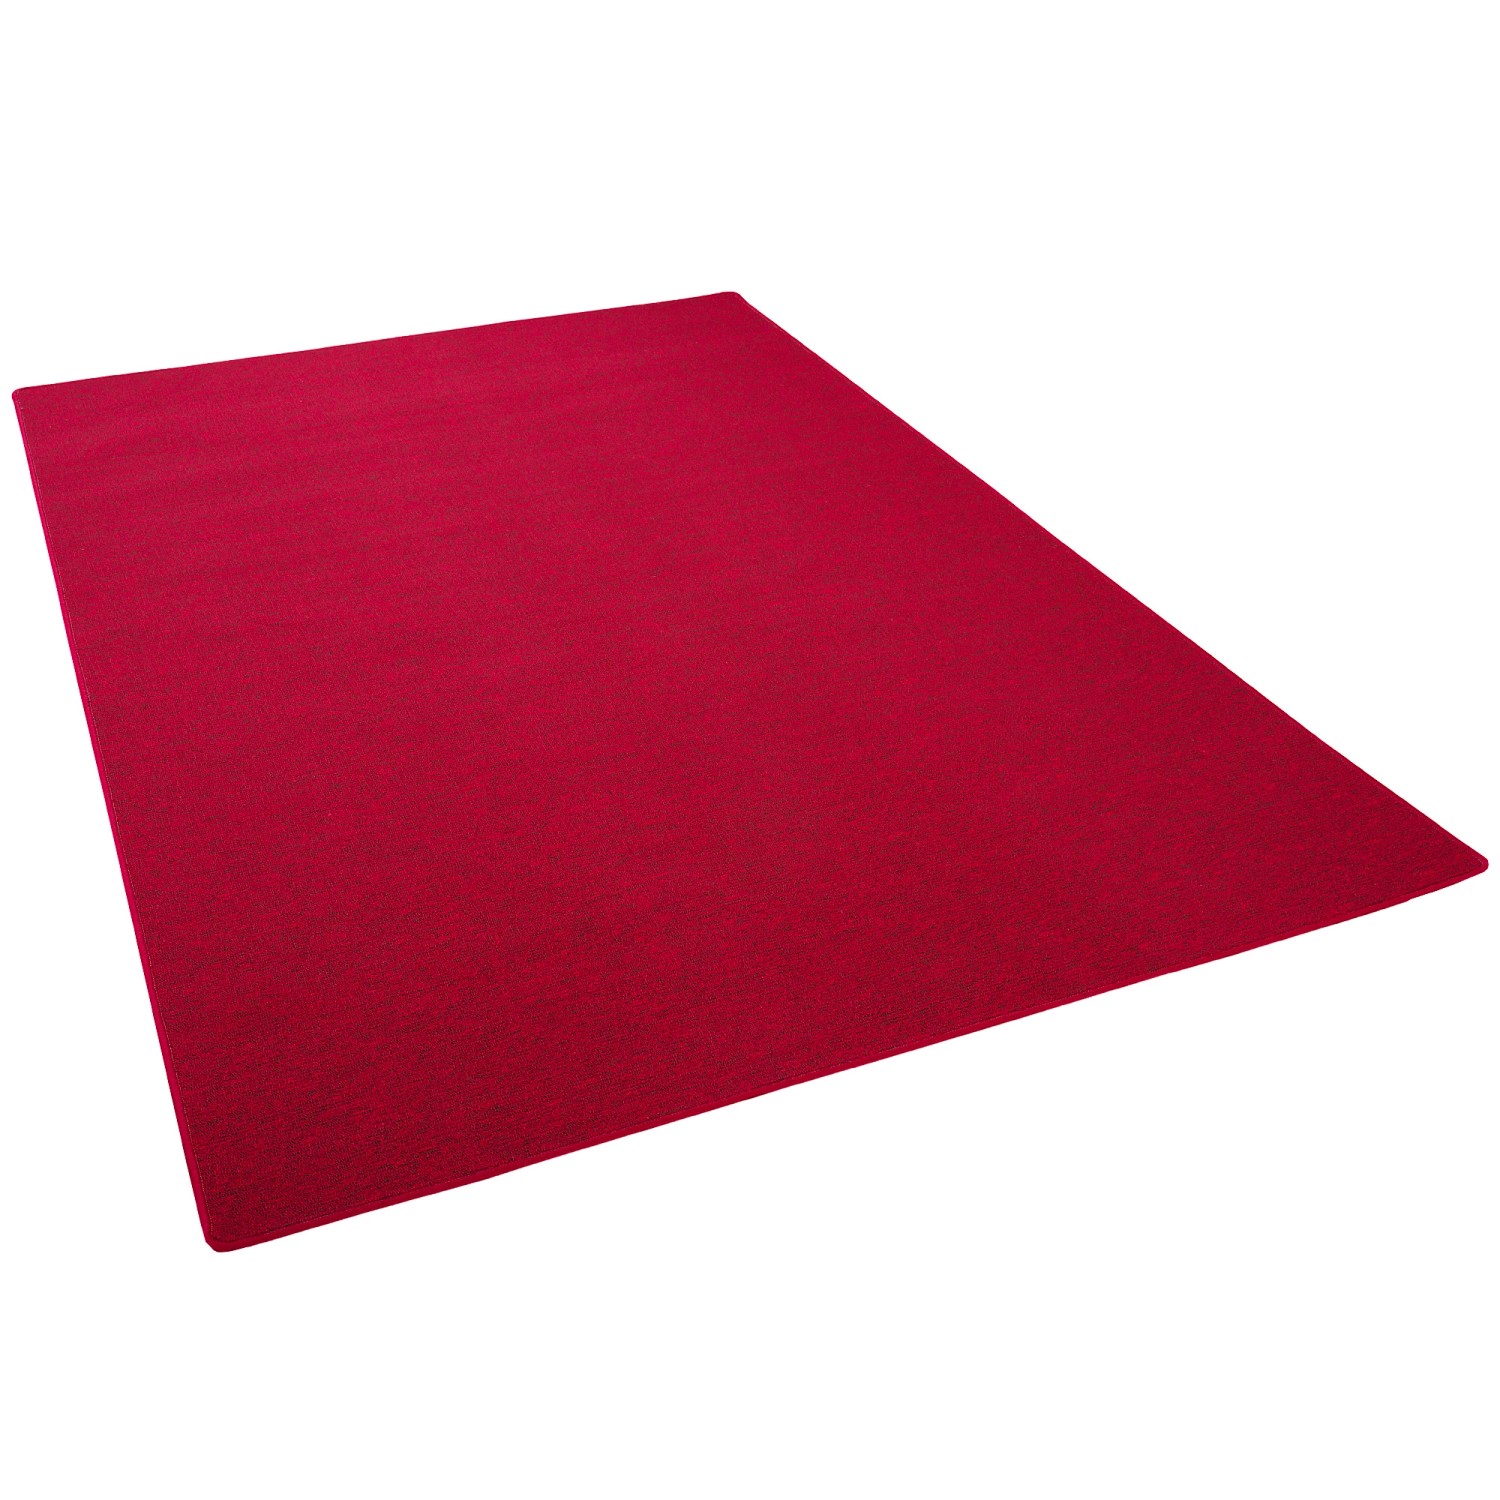 Snapstyle Feinschlingen Velour Teppich Strong Rot 200x300cm günstig online kaufen